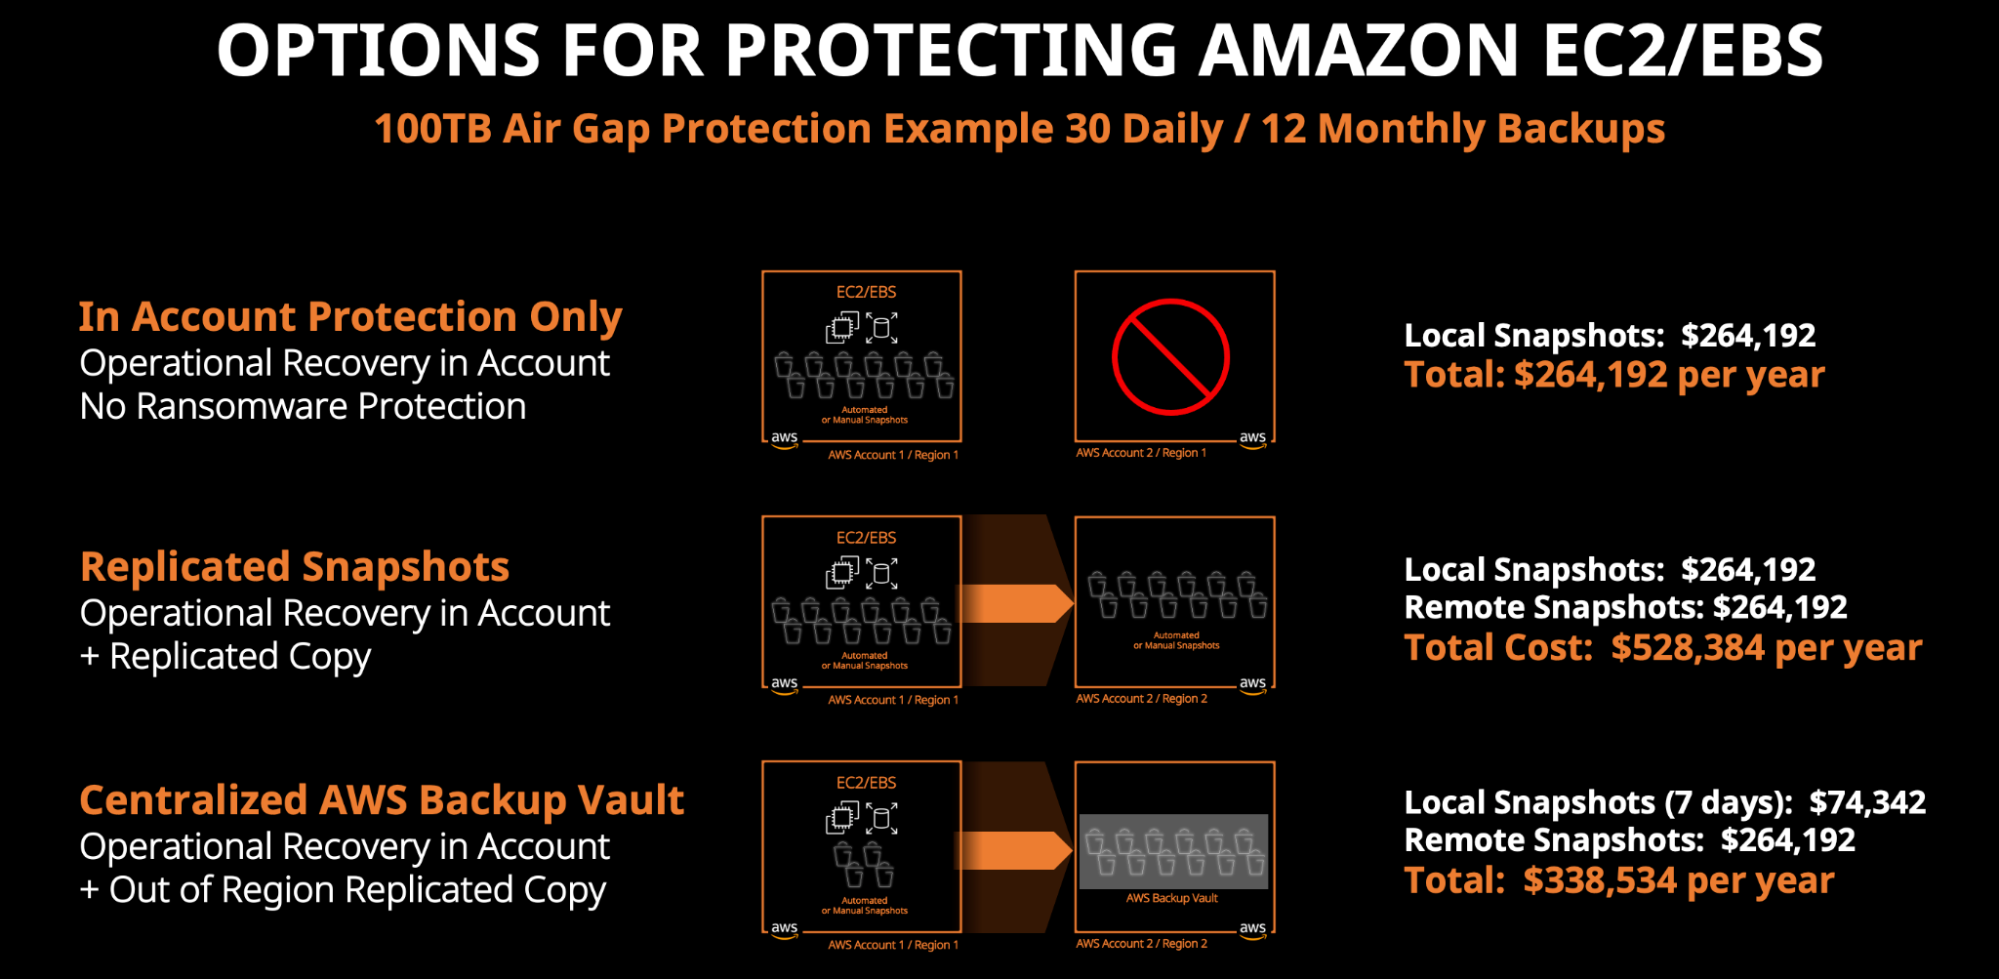 Options for Protecting Amazon EC2/EBS